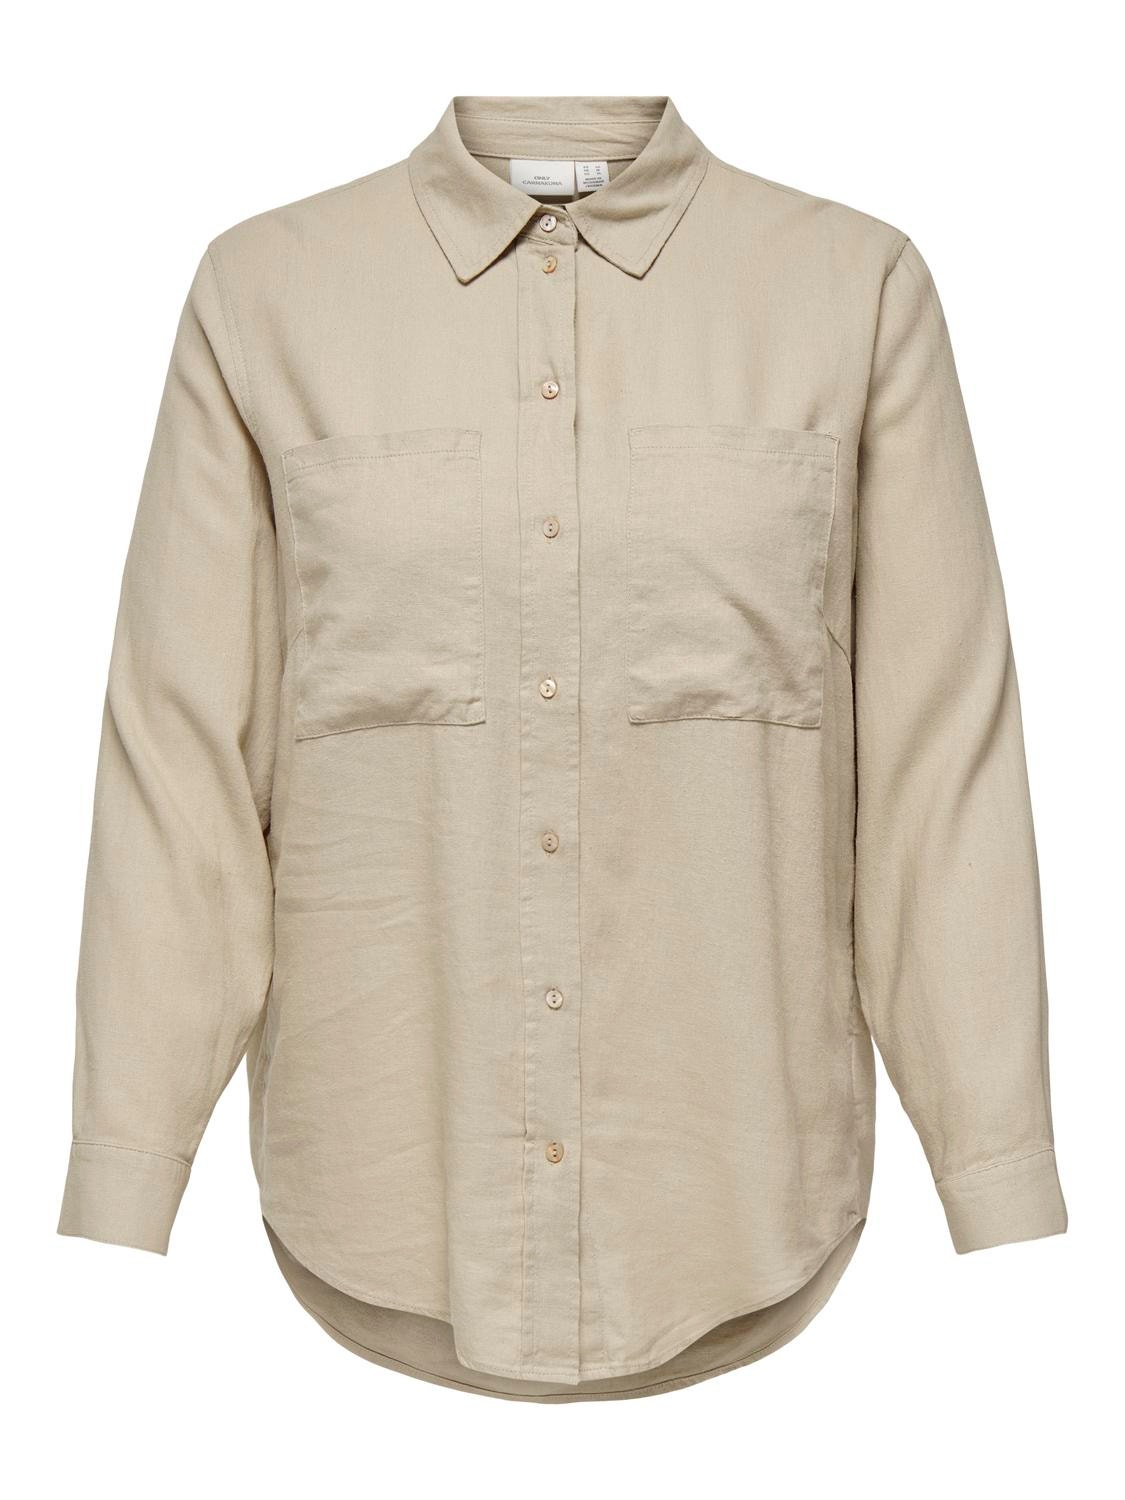 ONLY Oversize Fit Shirt collar Curve Shirt -Oxford Tan - 15281041